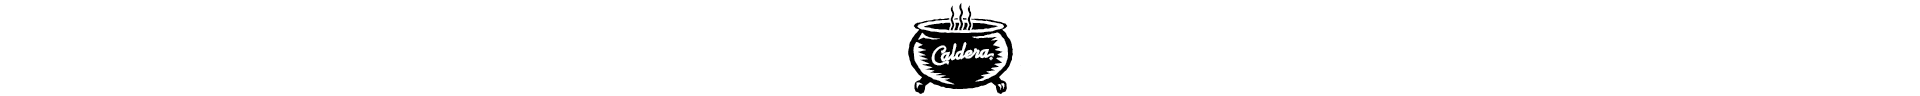 Caldera-Line-4-01